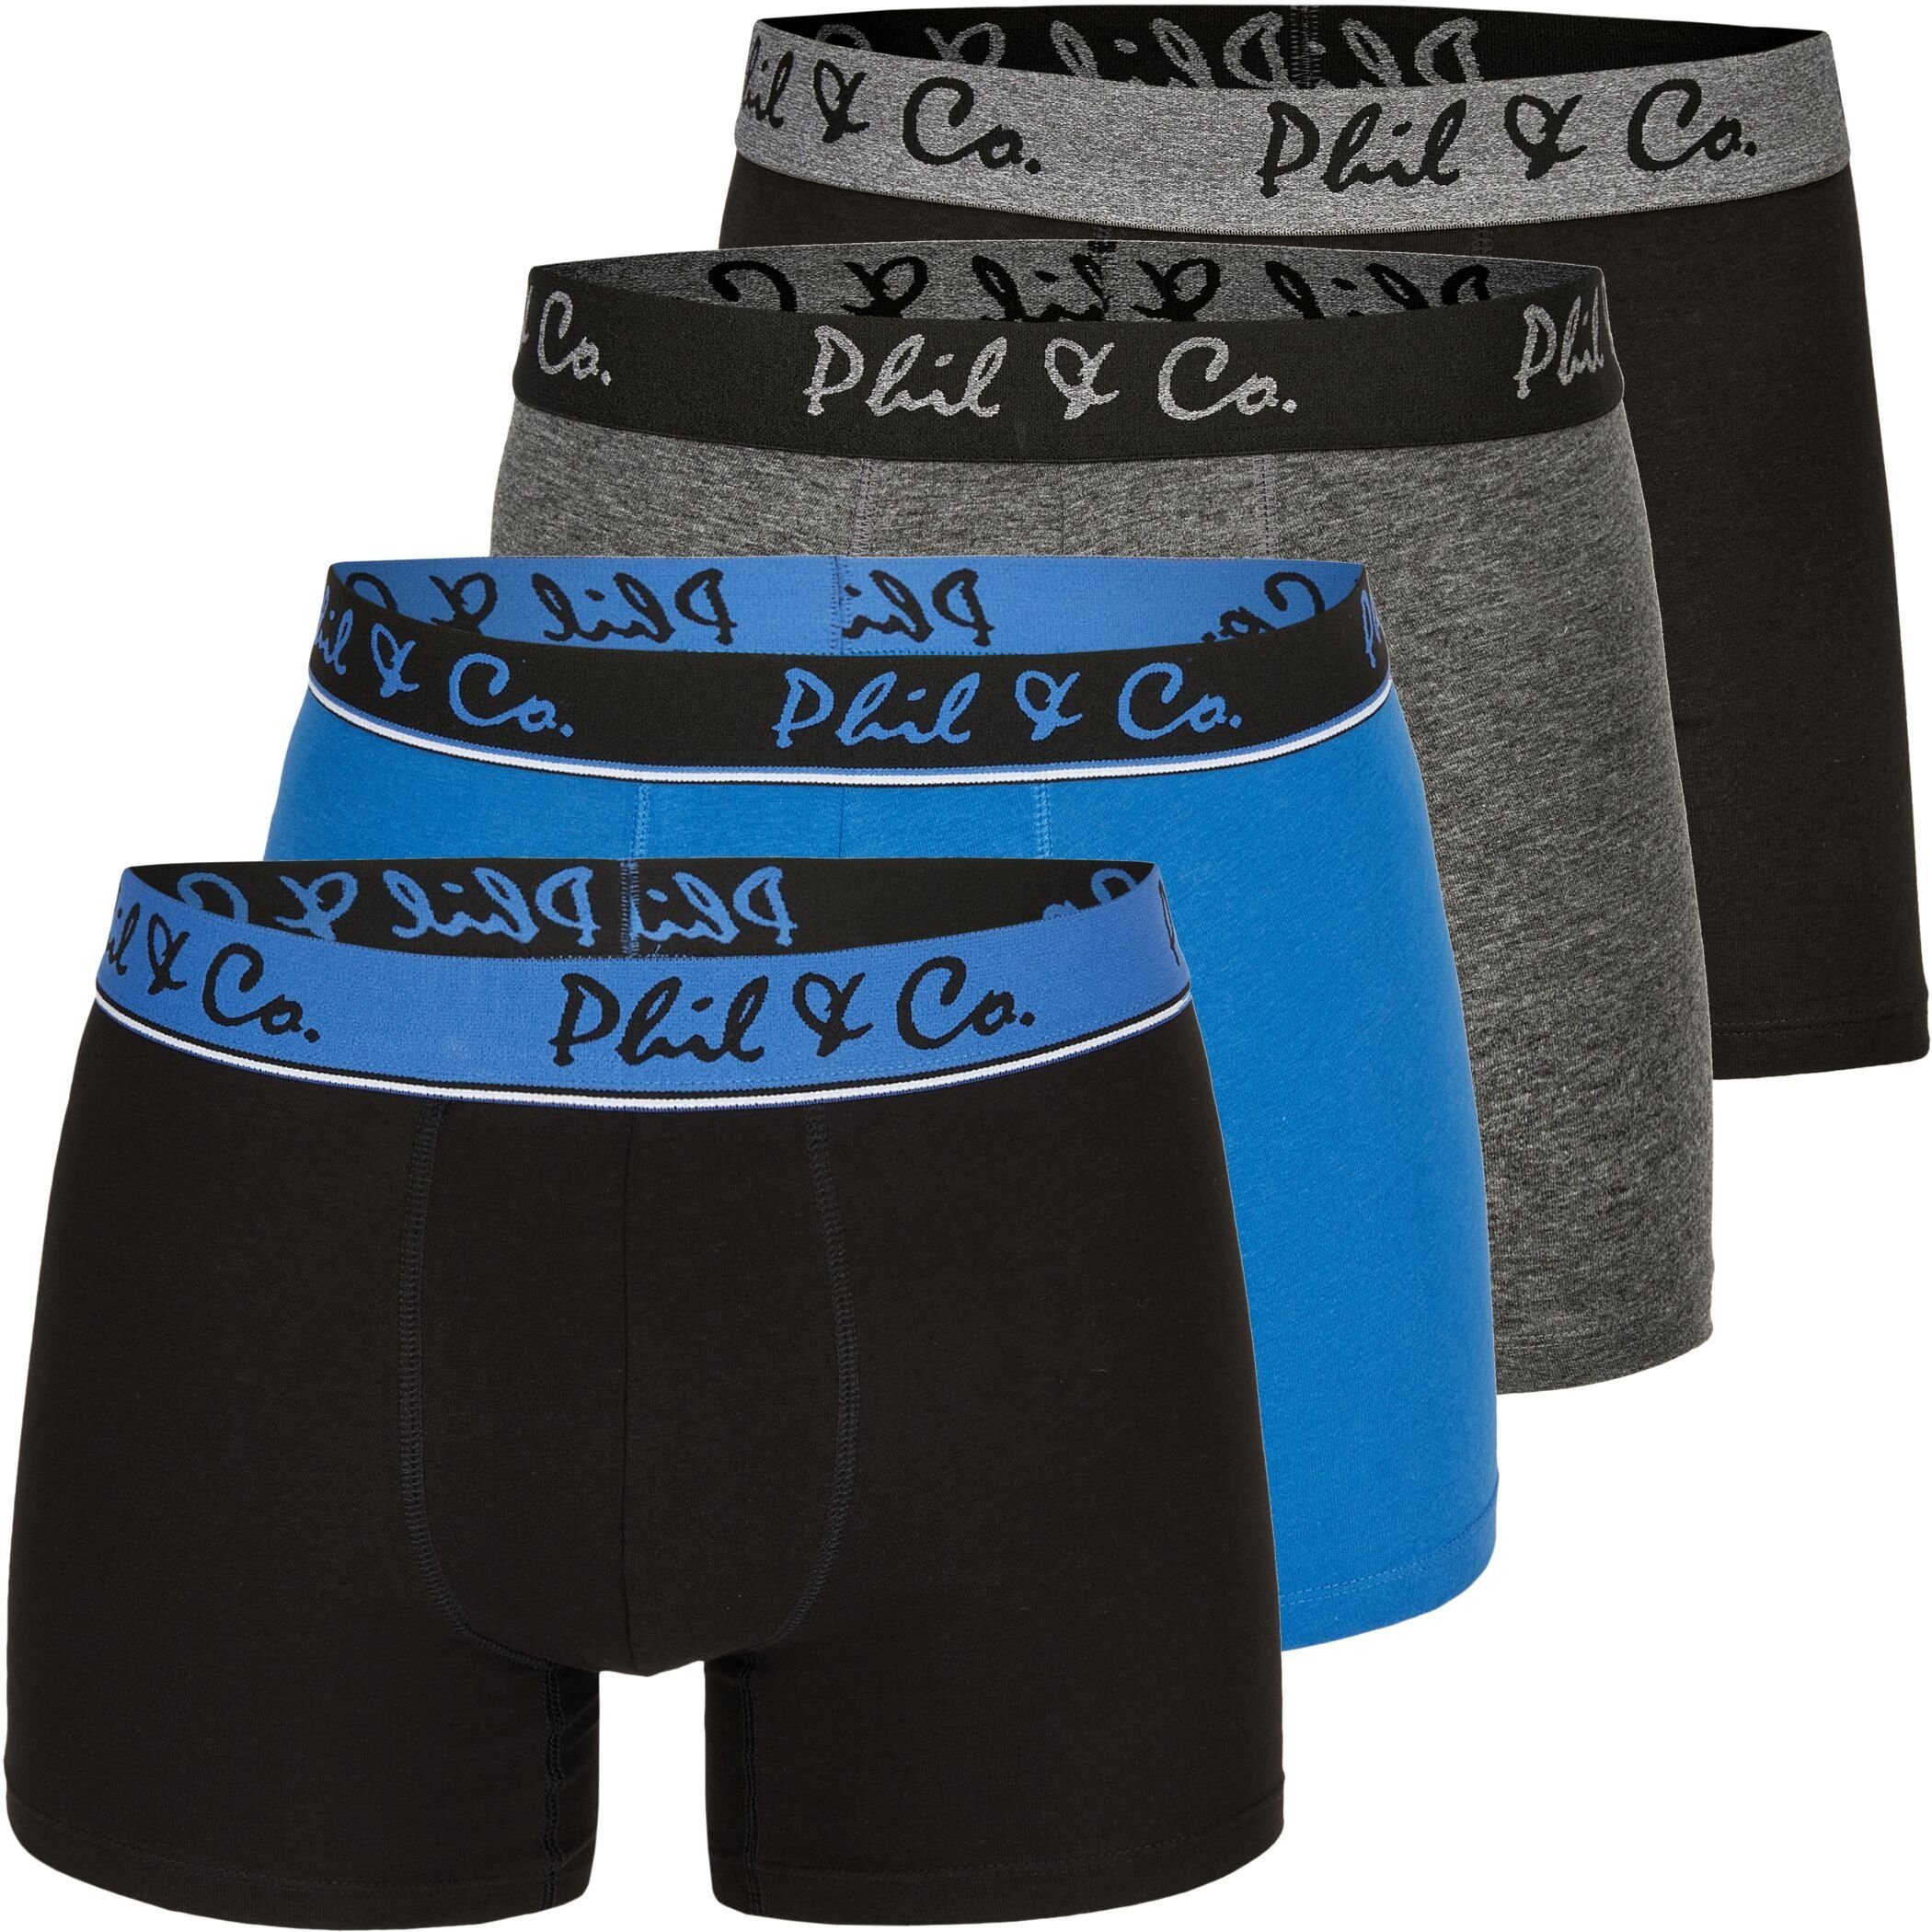 (1-St) Boxershorts Short Pant 4er Berlin Phil Co Phil DESIGN Trunk FARBWAHL Co. & & 13 Pack Boxershorts Jersey